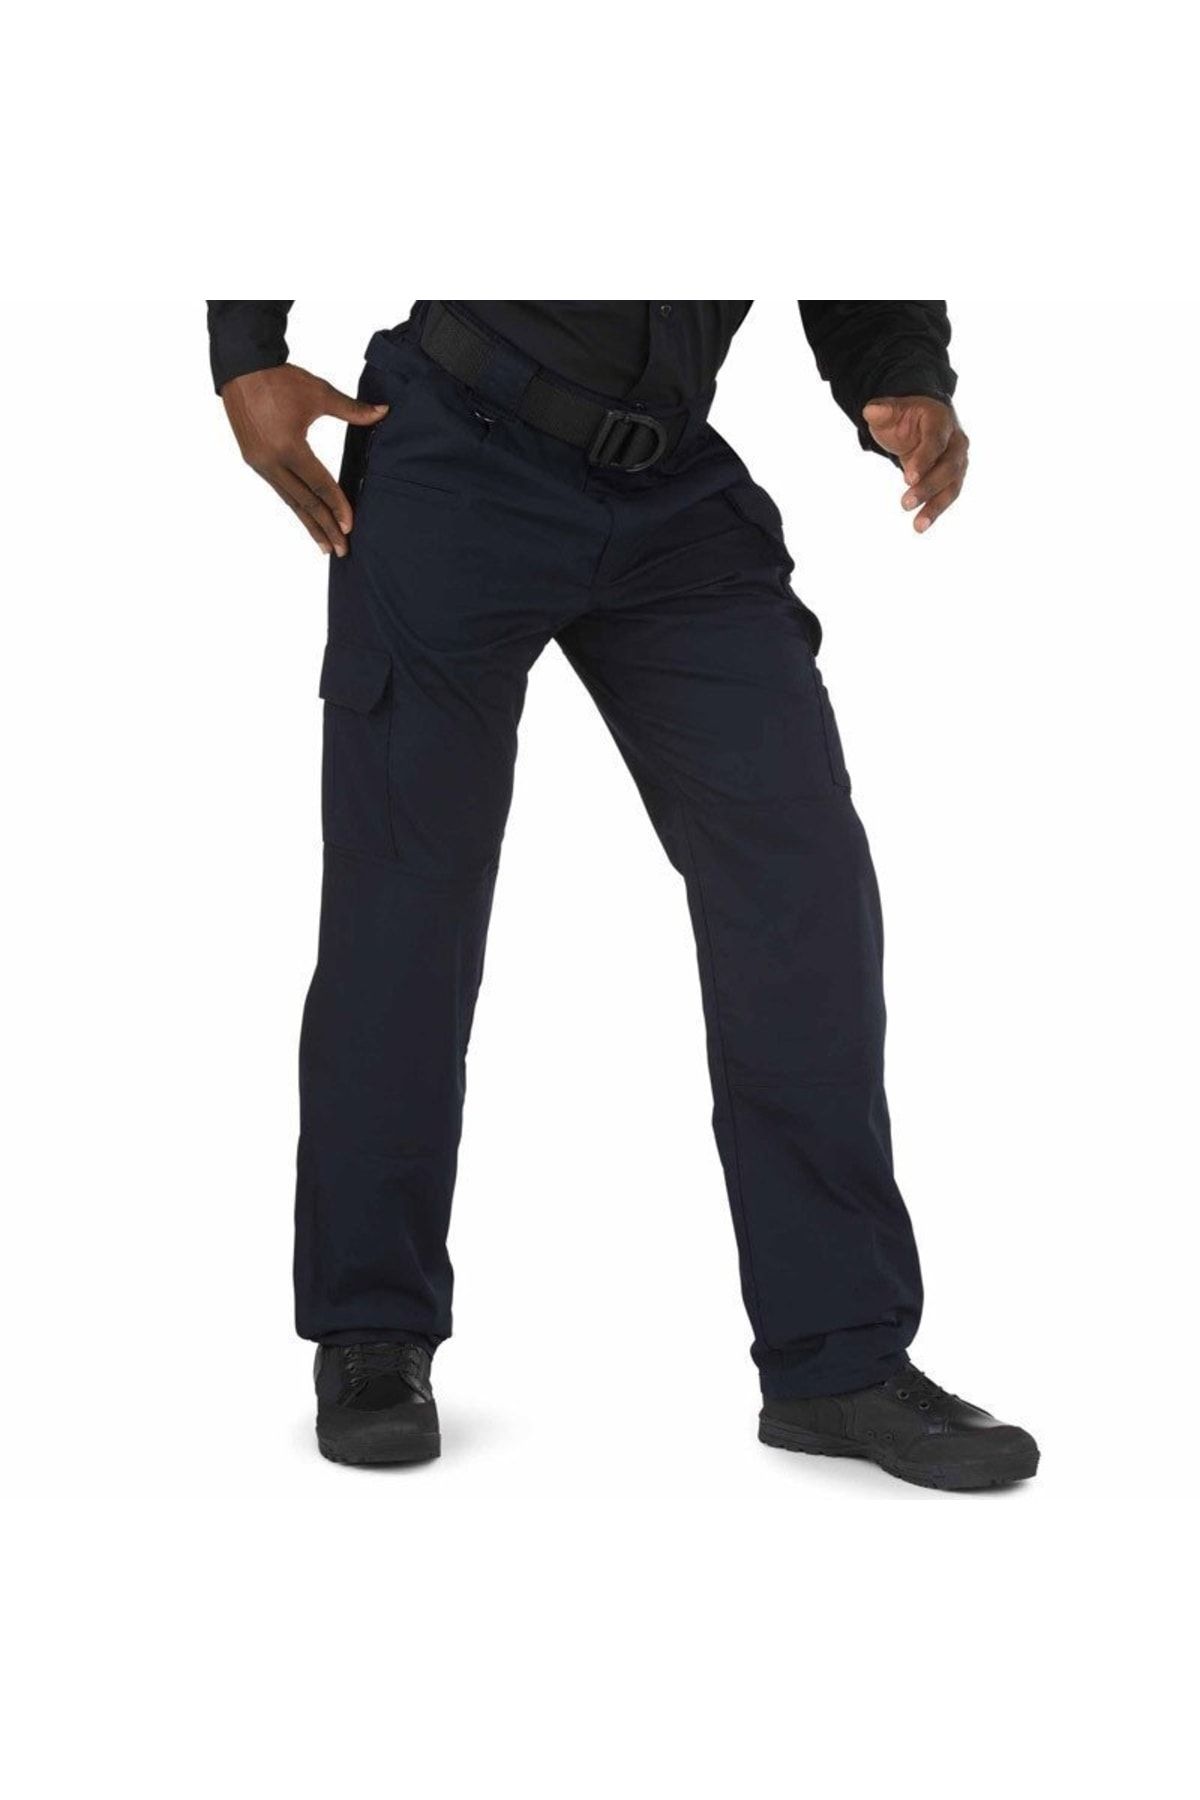 5.11 Tactical TDU Fast Tac Pant, khaki : Amazon.co.uk: Fashion